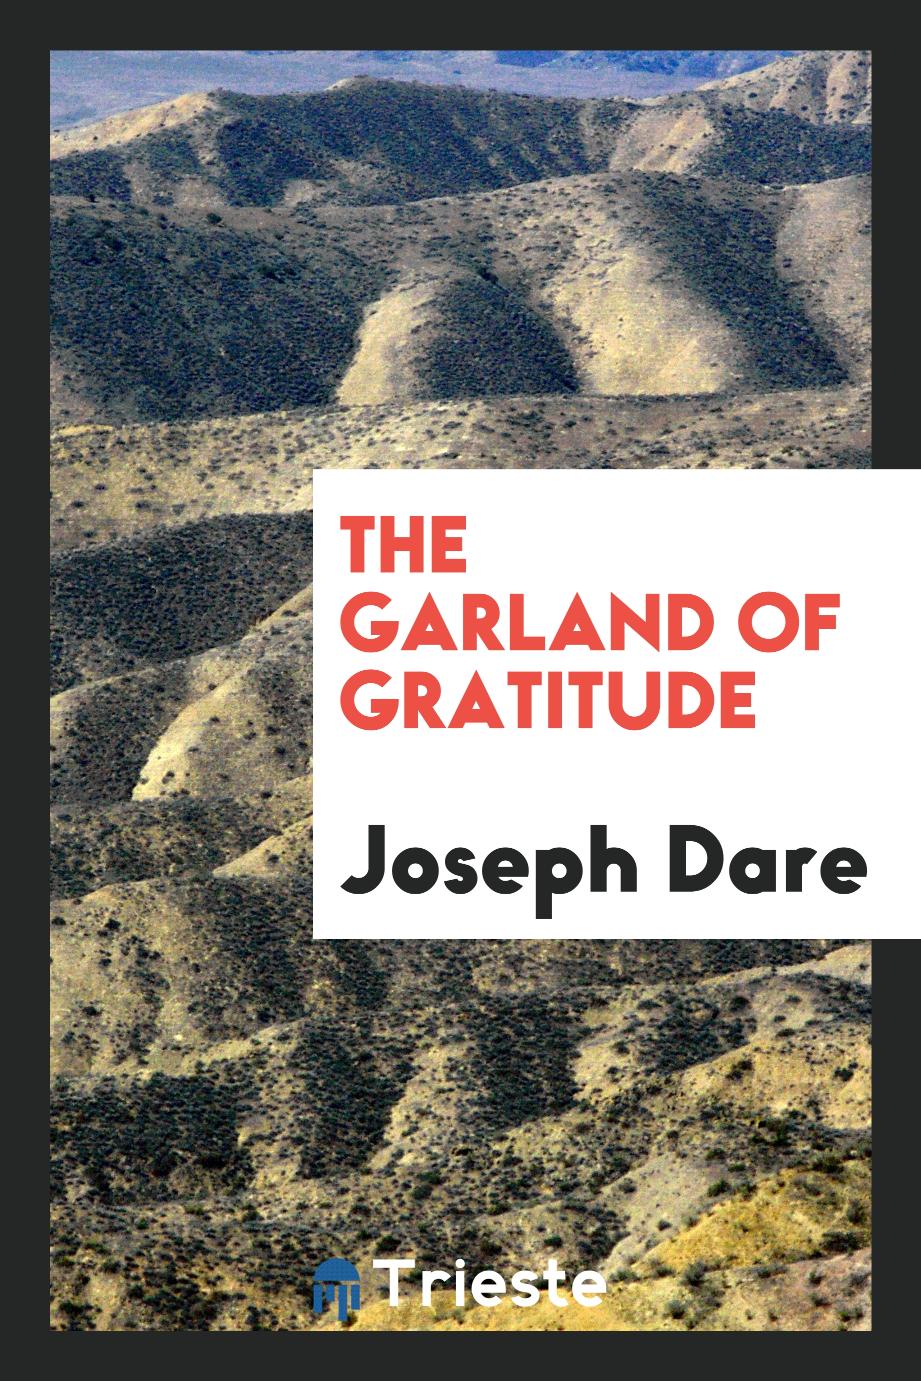 The garland of gratitude